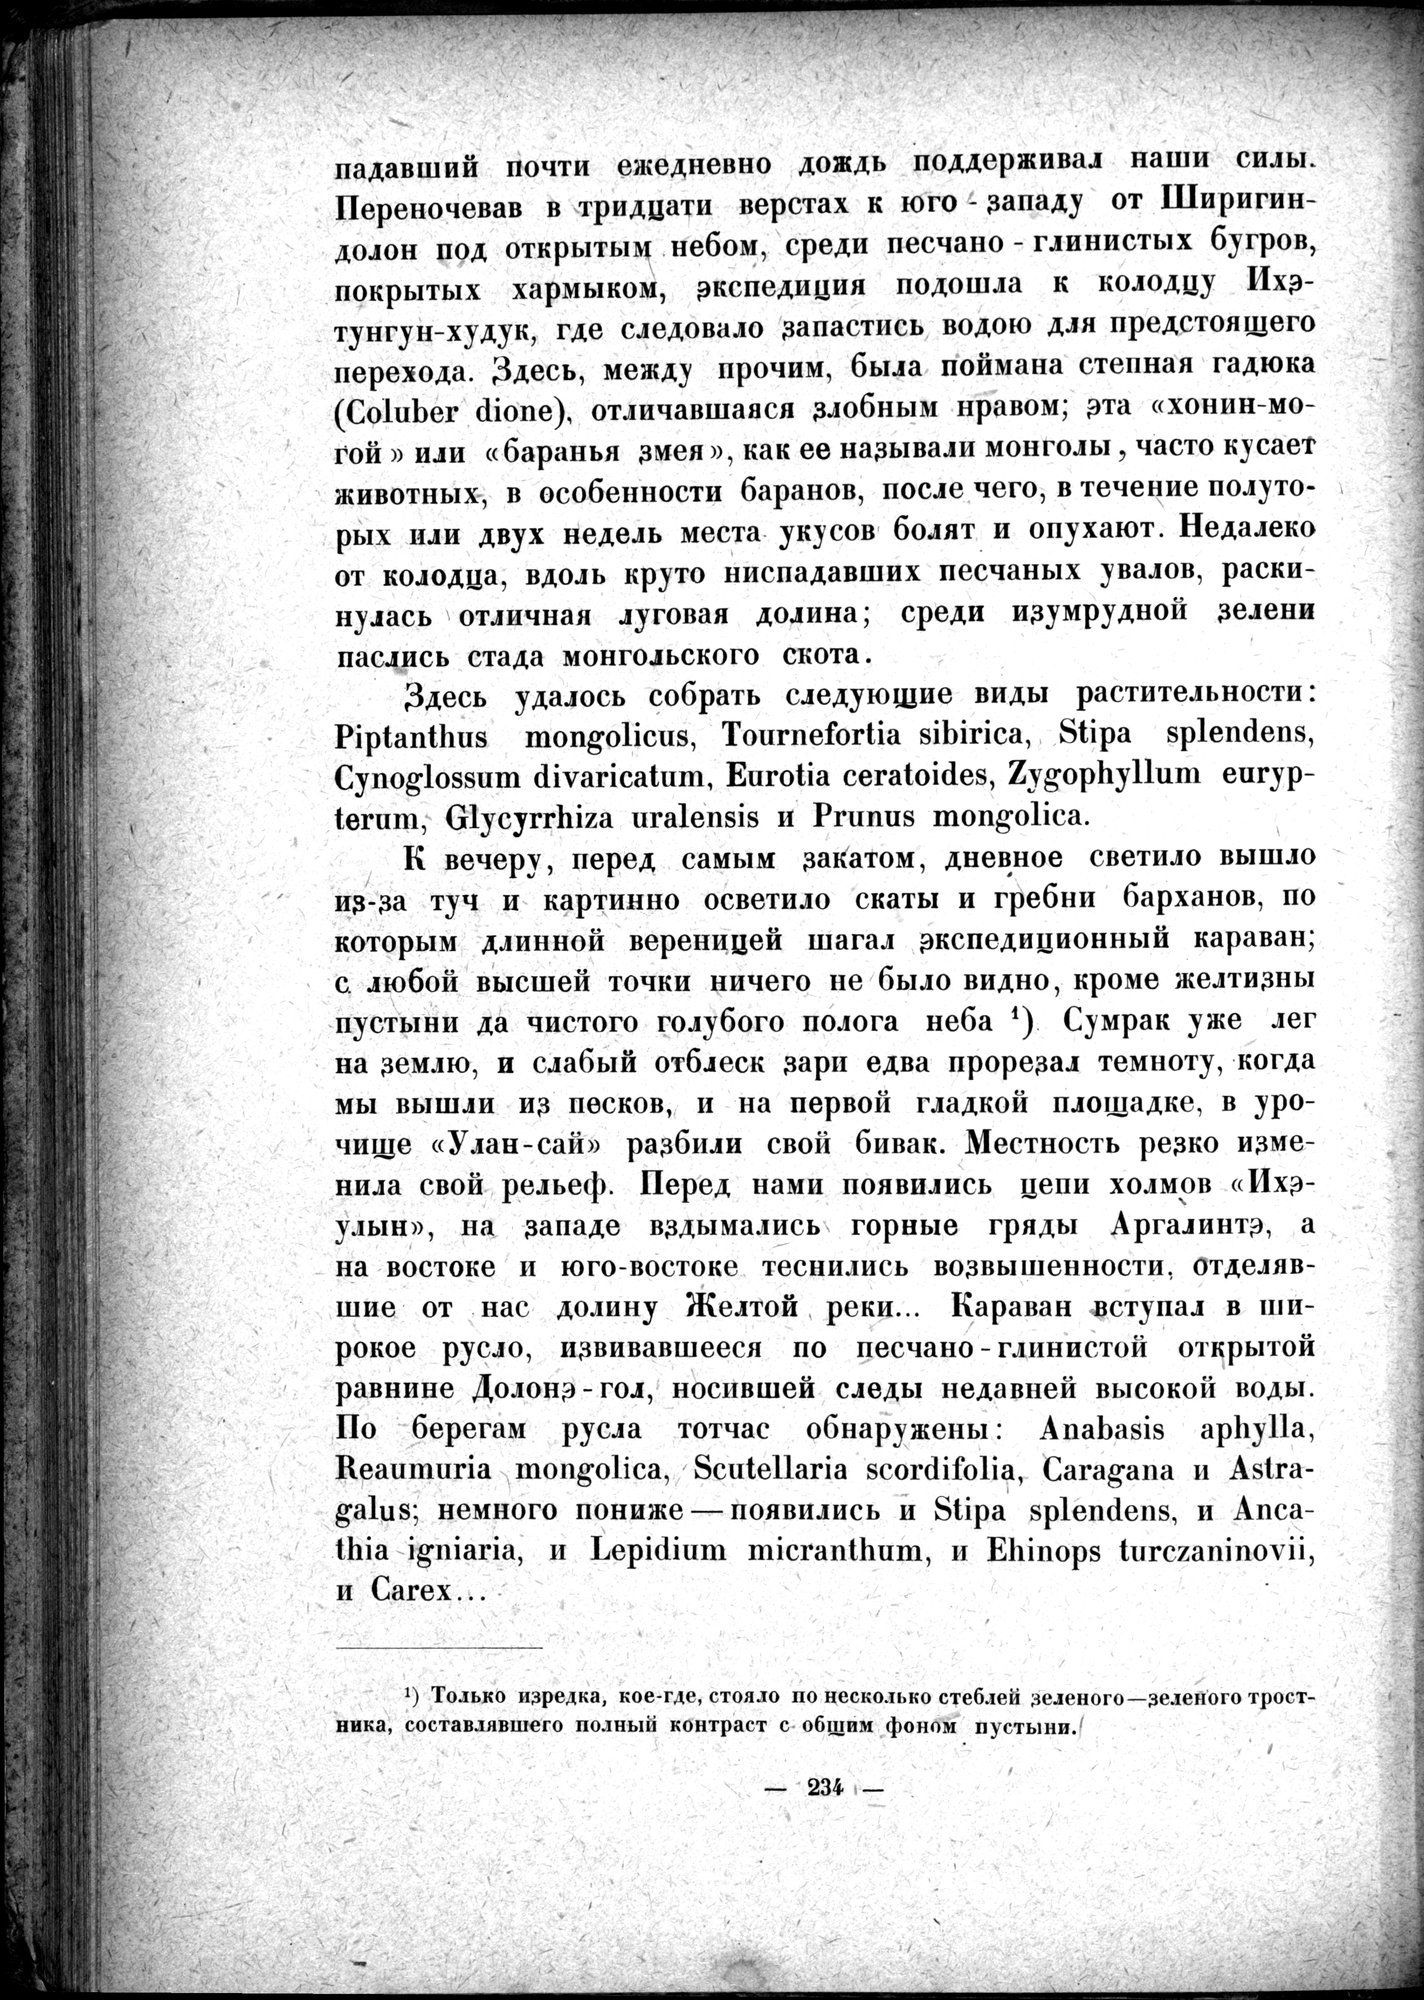 Mongoliya i Amdo i mertby gorod Khara-Khoto : vol.1 / Page 280 (Grayscale High Resolution Image)